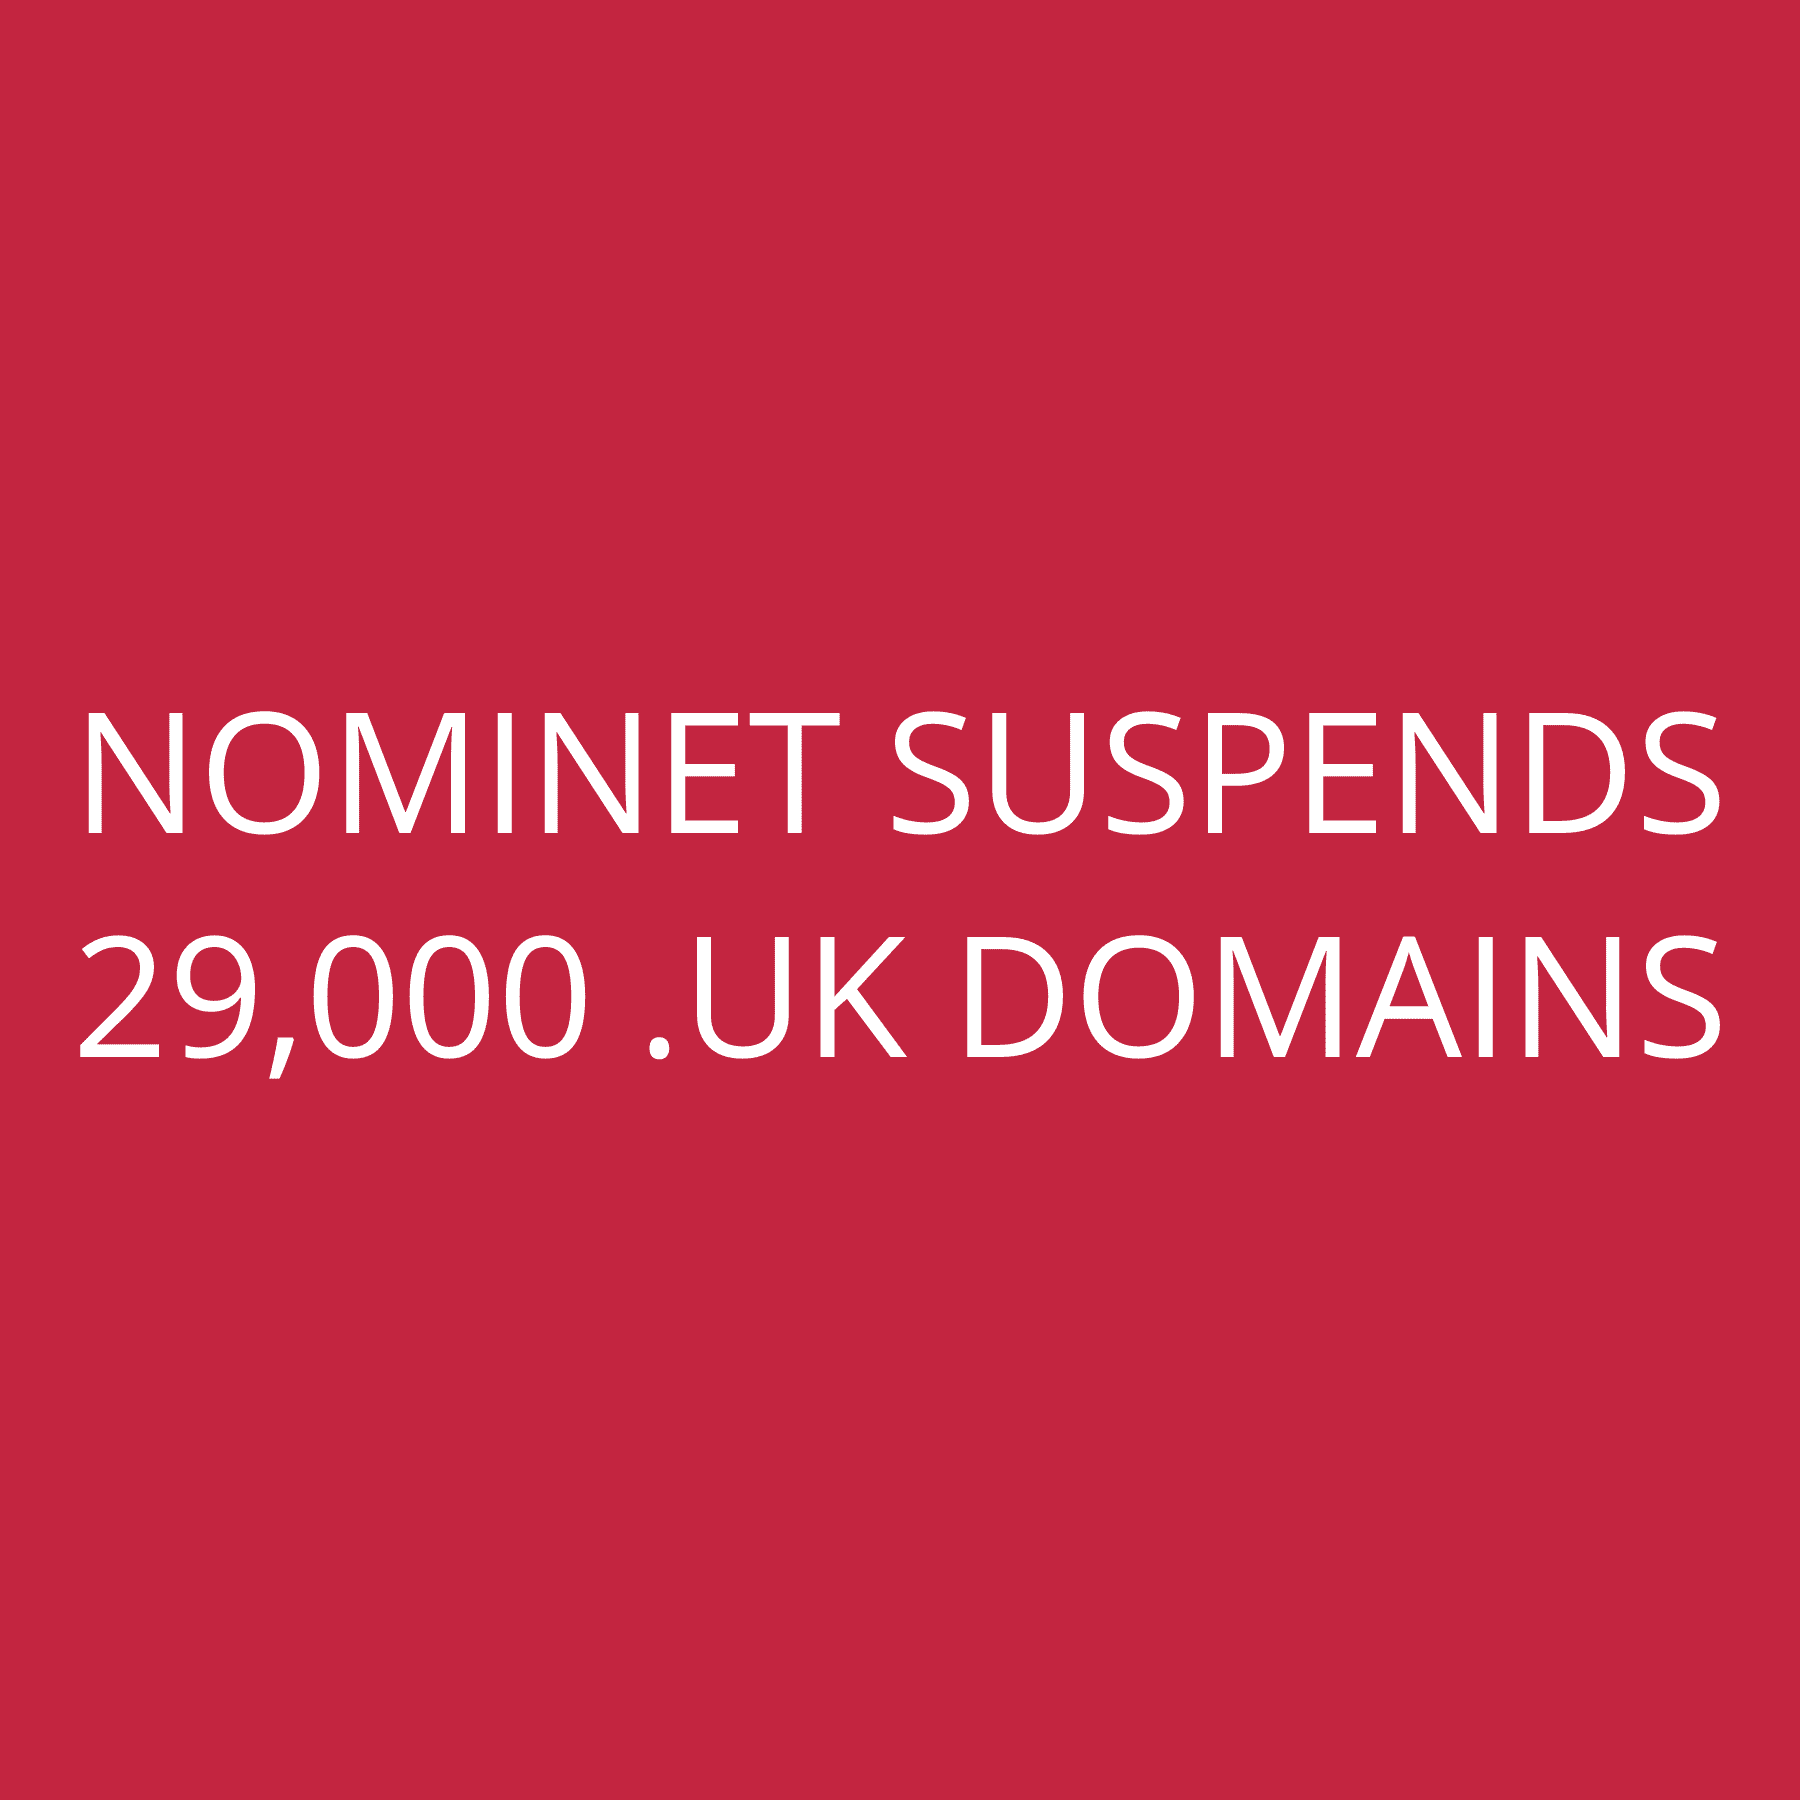 Nominet suspends 29,000 .uk domains